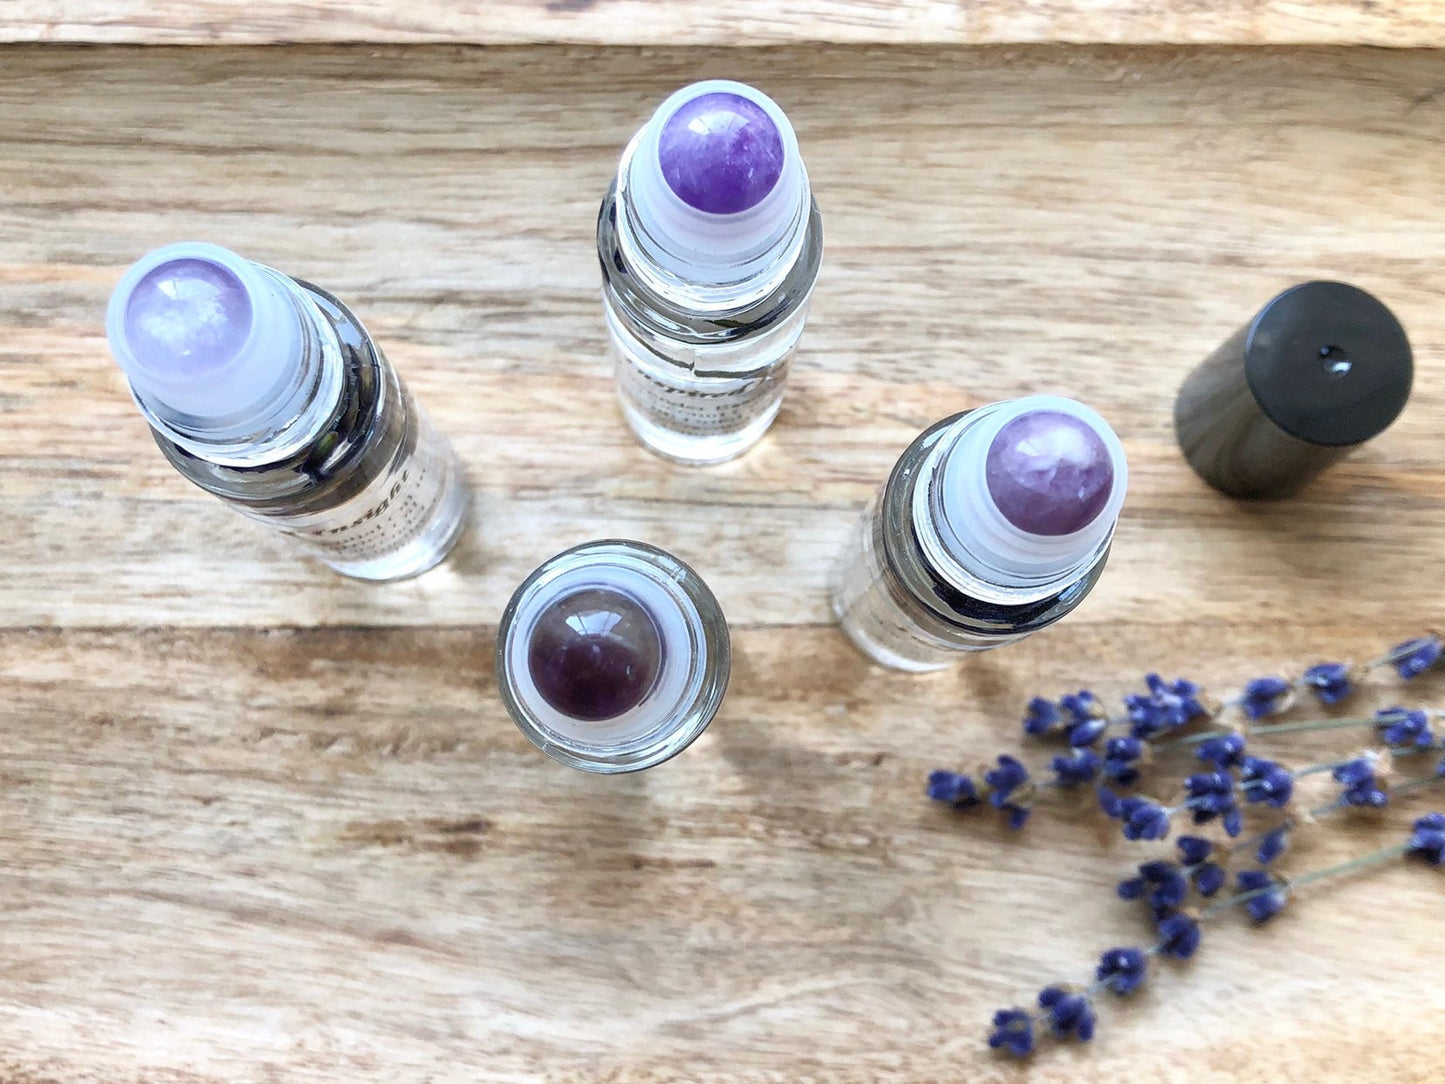 Crystalline "Inspired Insight" Essential Oil Roller - Amethsyt and Lavender